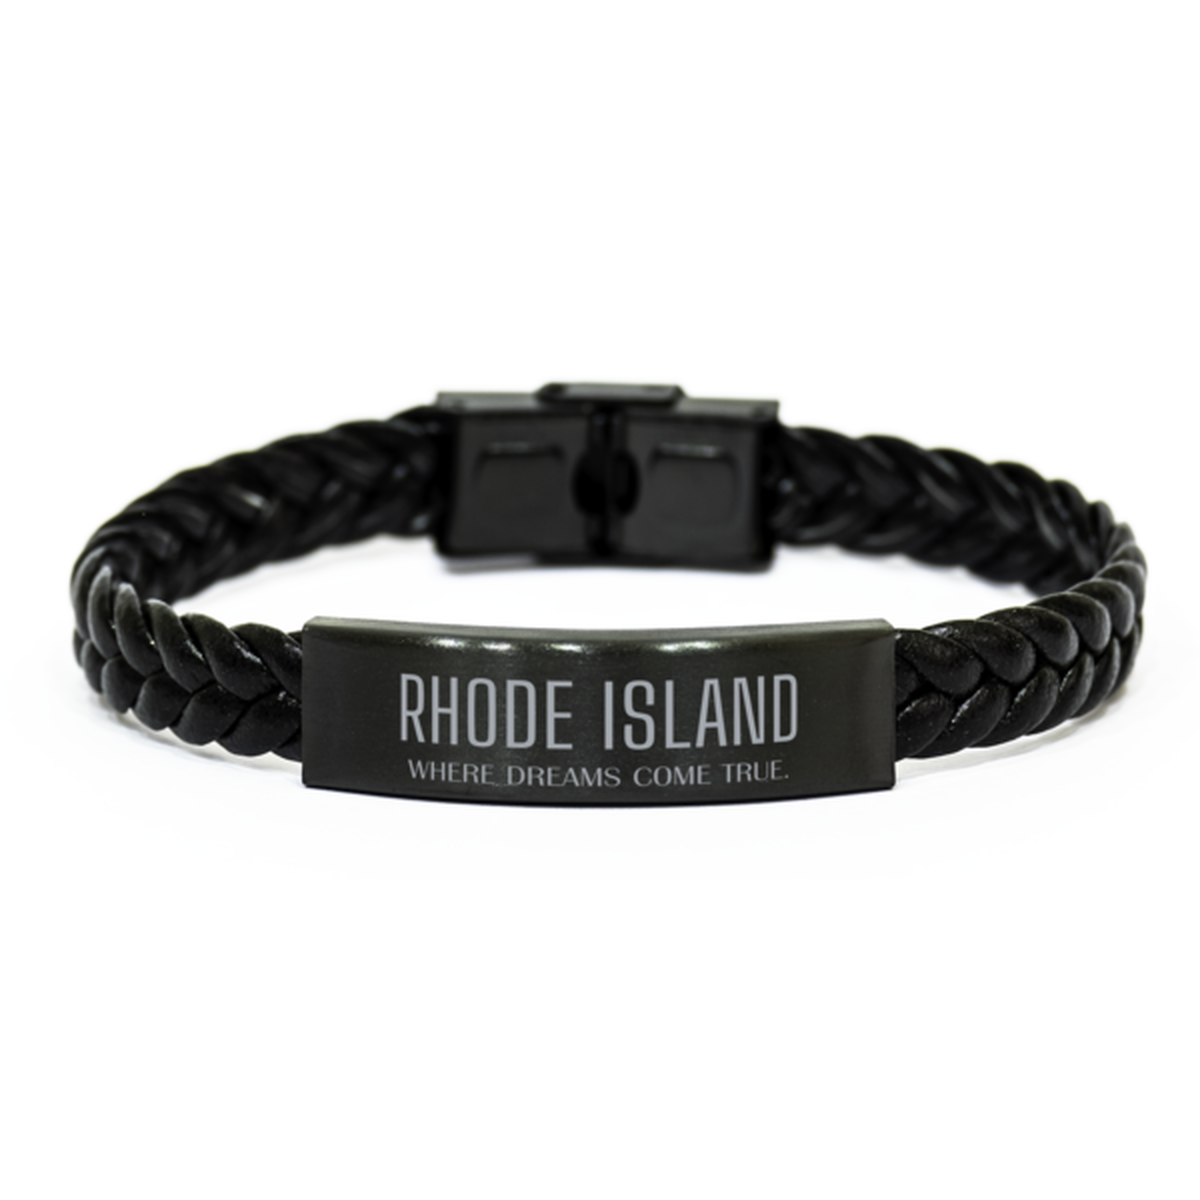 Love Rhode Island State Braided Leather Bracelet, Rhode Island Where dreams come true, Birthday Inspirational Gifts For Rhode Island Men, Women, Friends